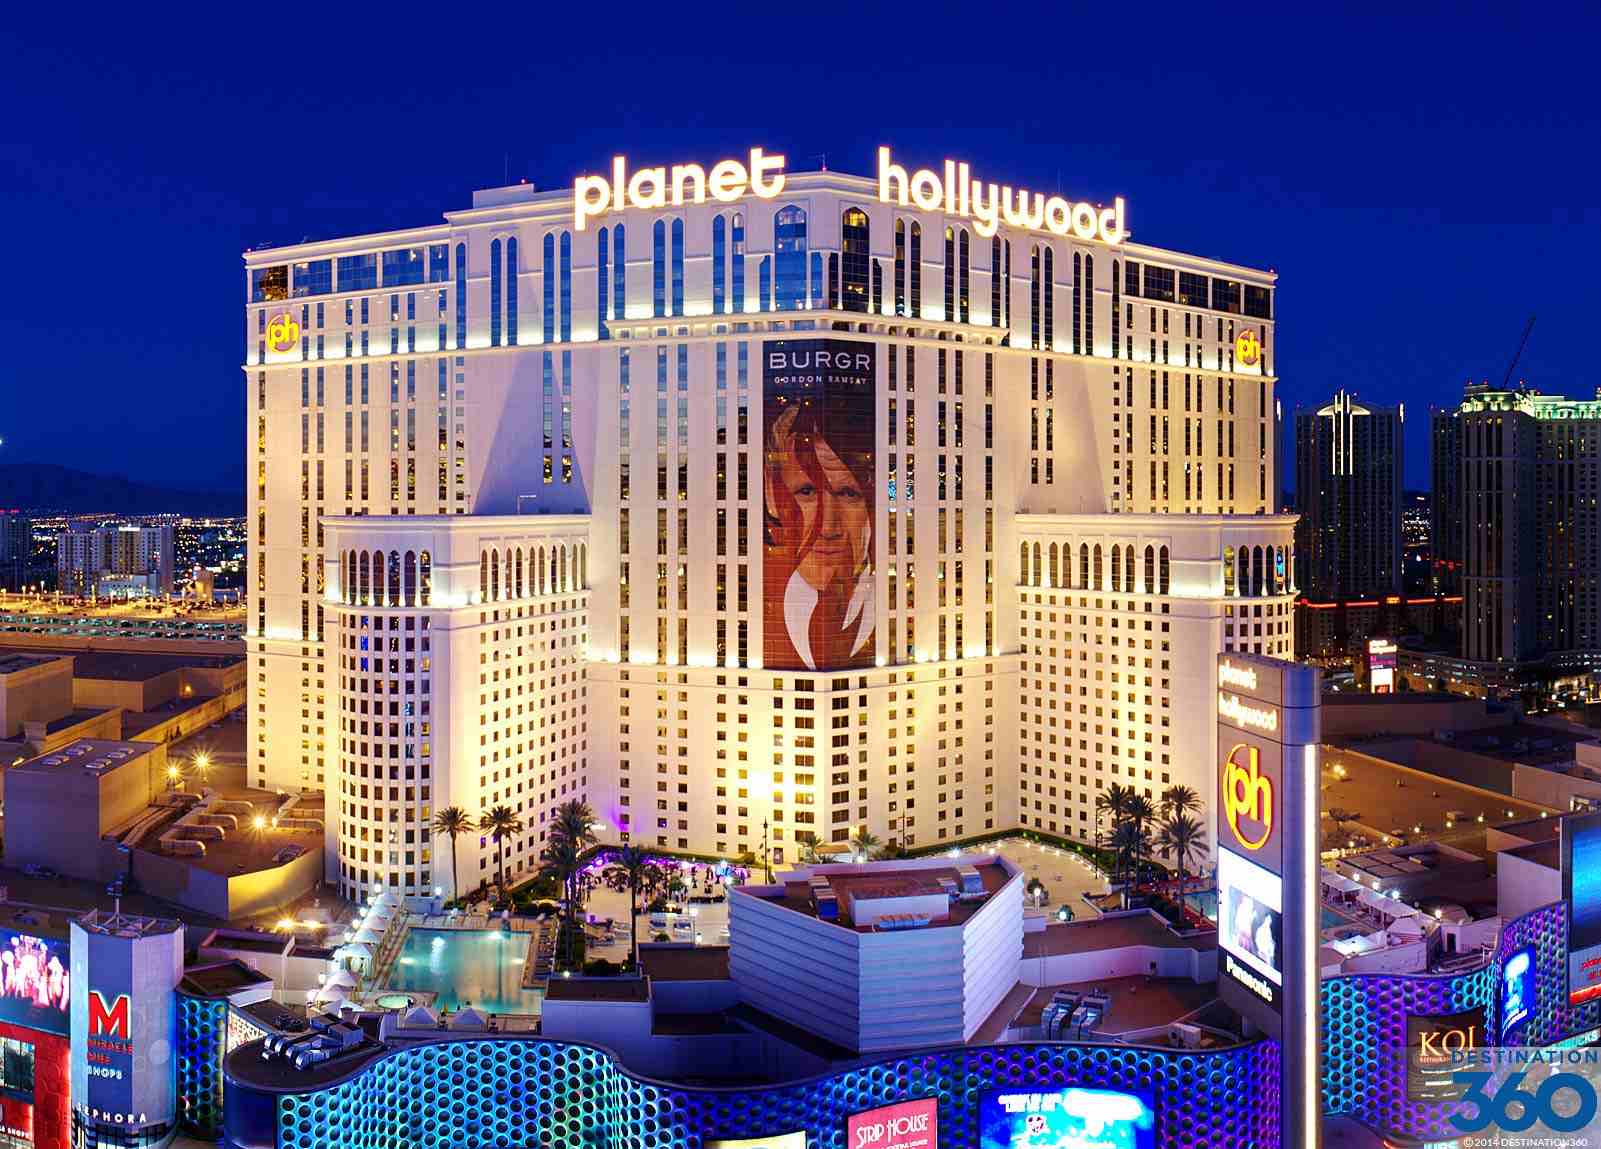 Planet Hollywood Las Vegas Resort and Casino